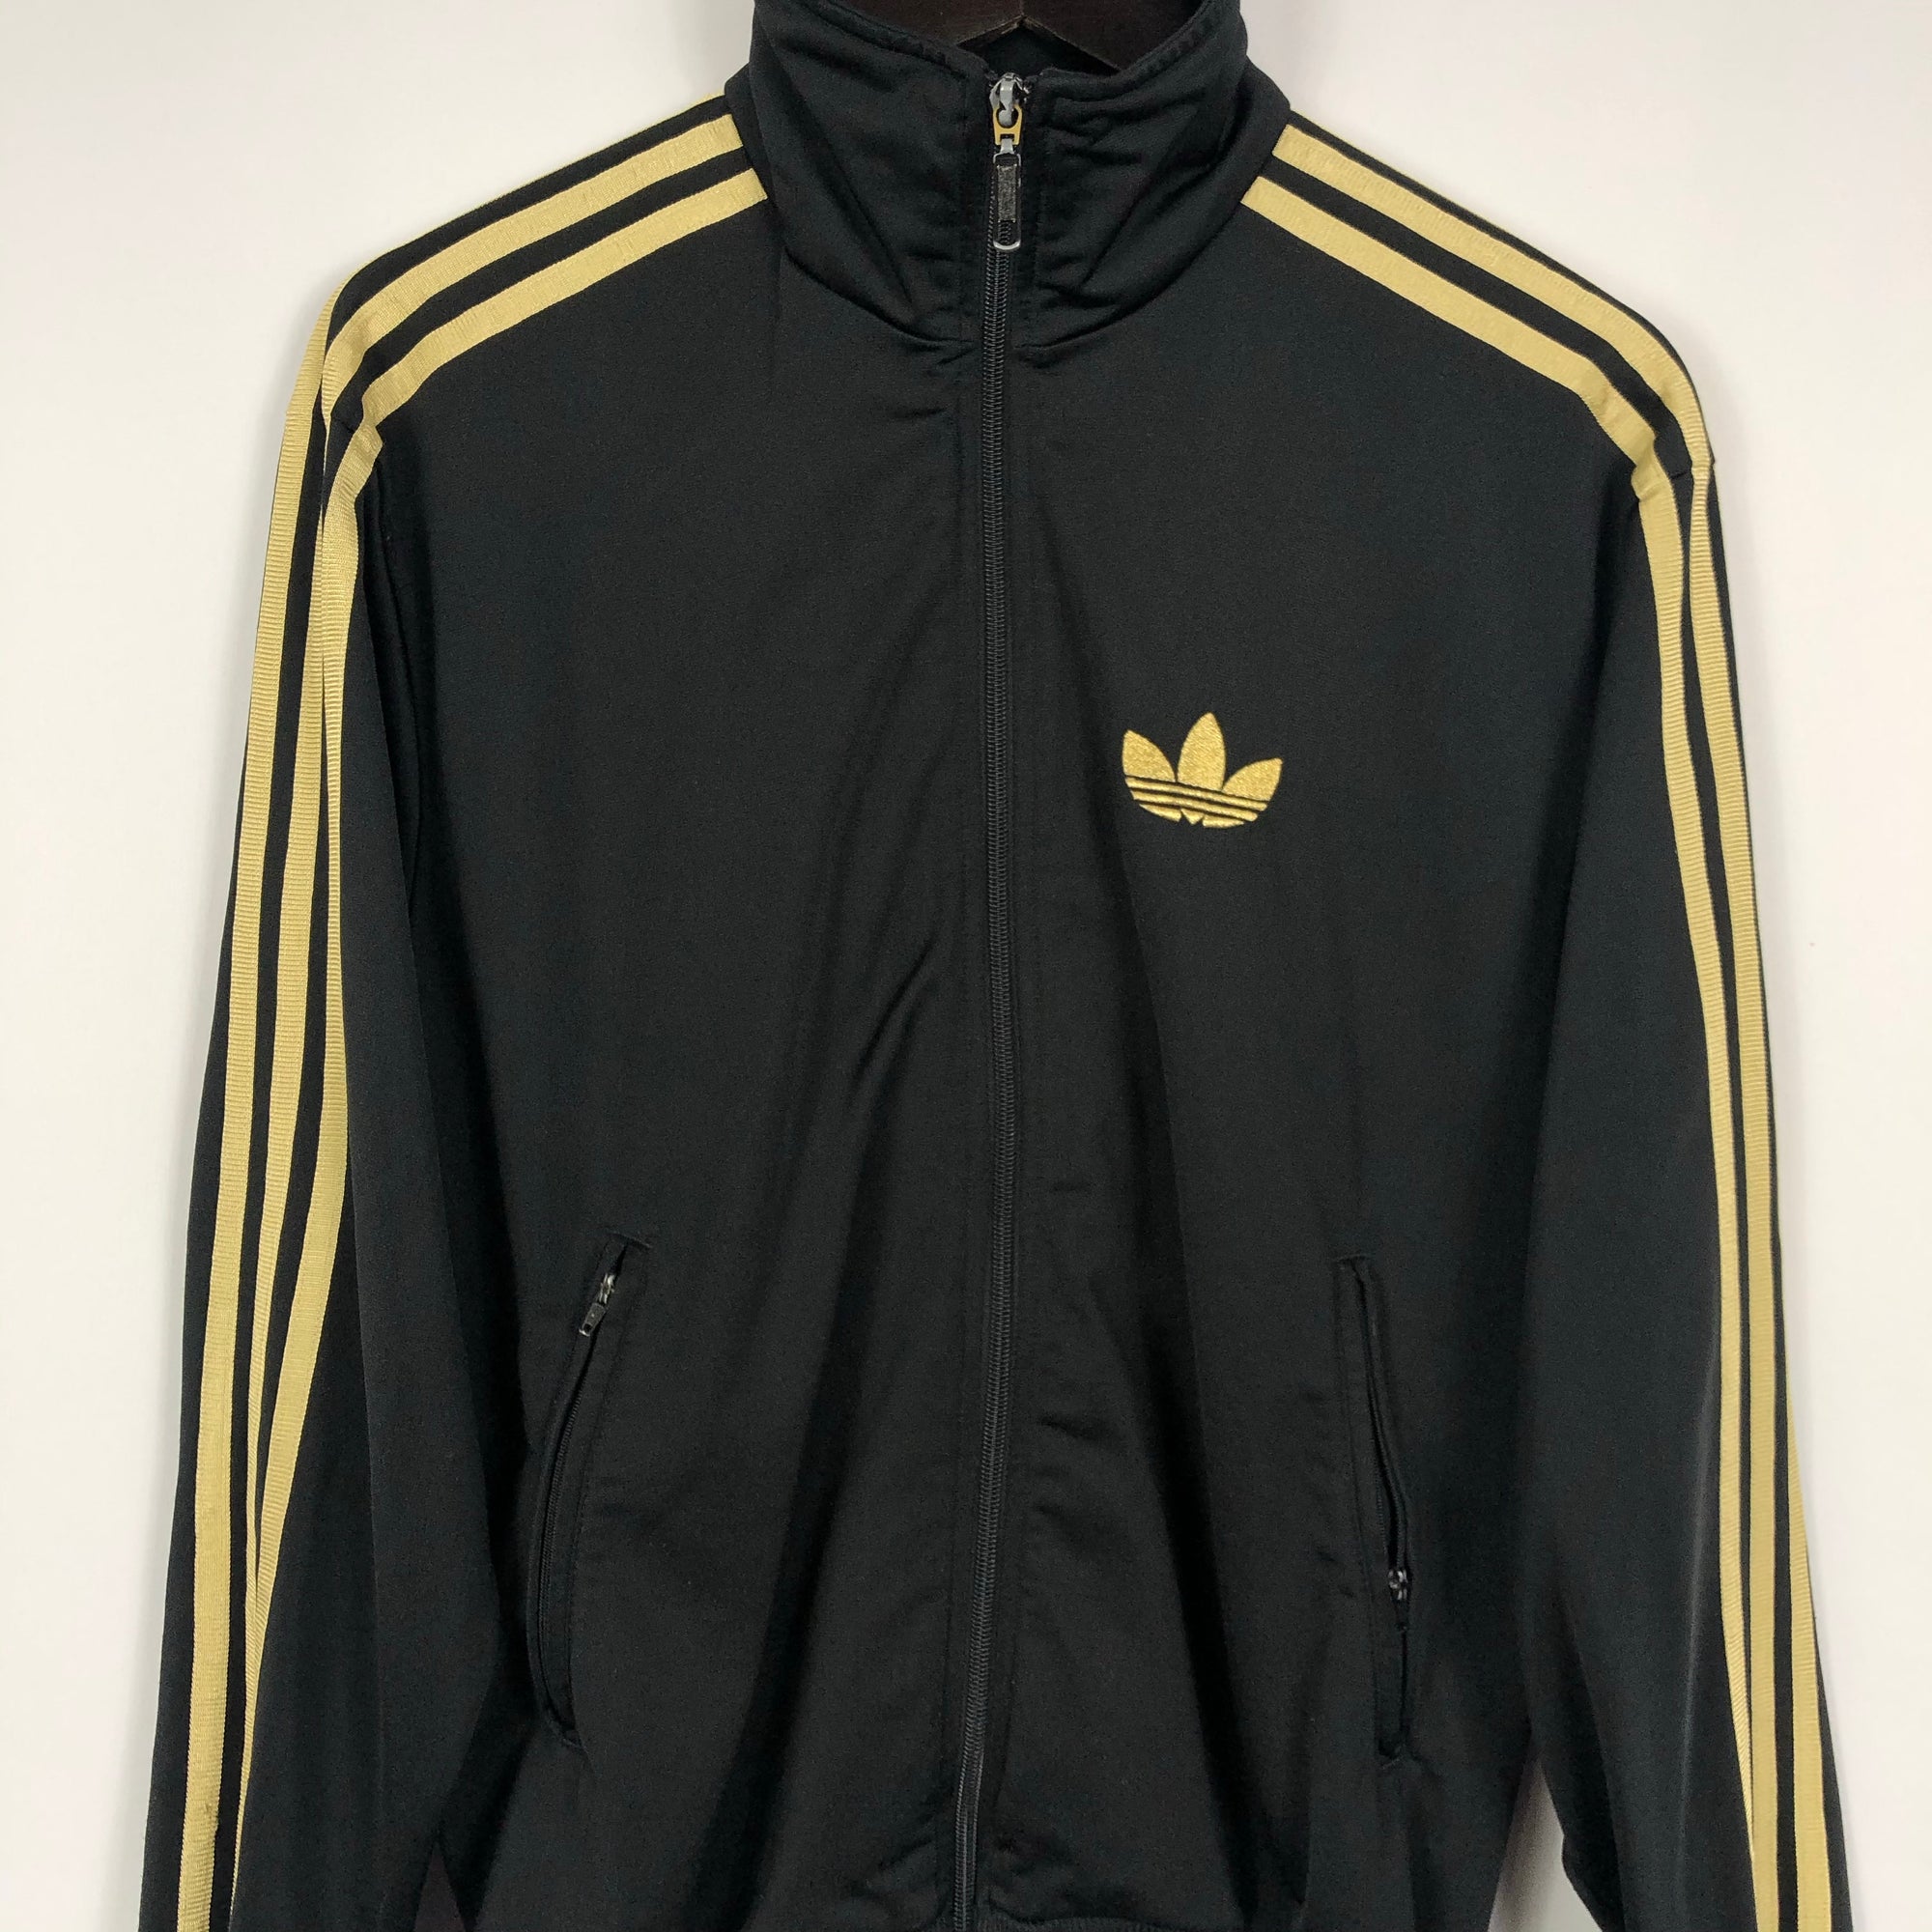 Adidas Track Jacket in Black & Gold - Women’s Medium/Men’s Small